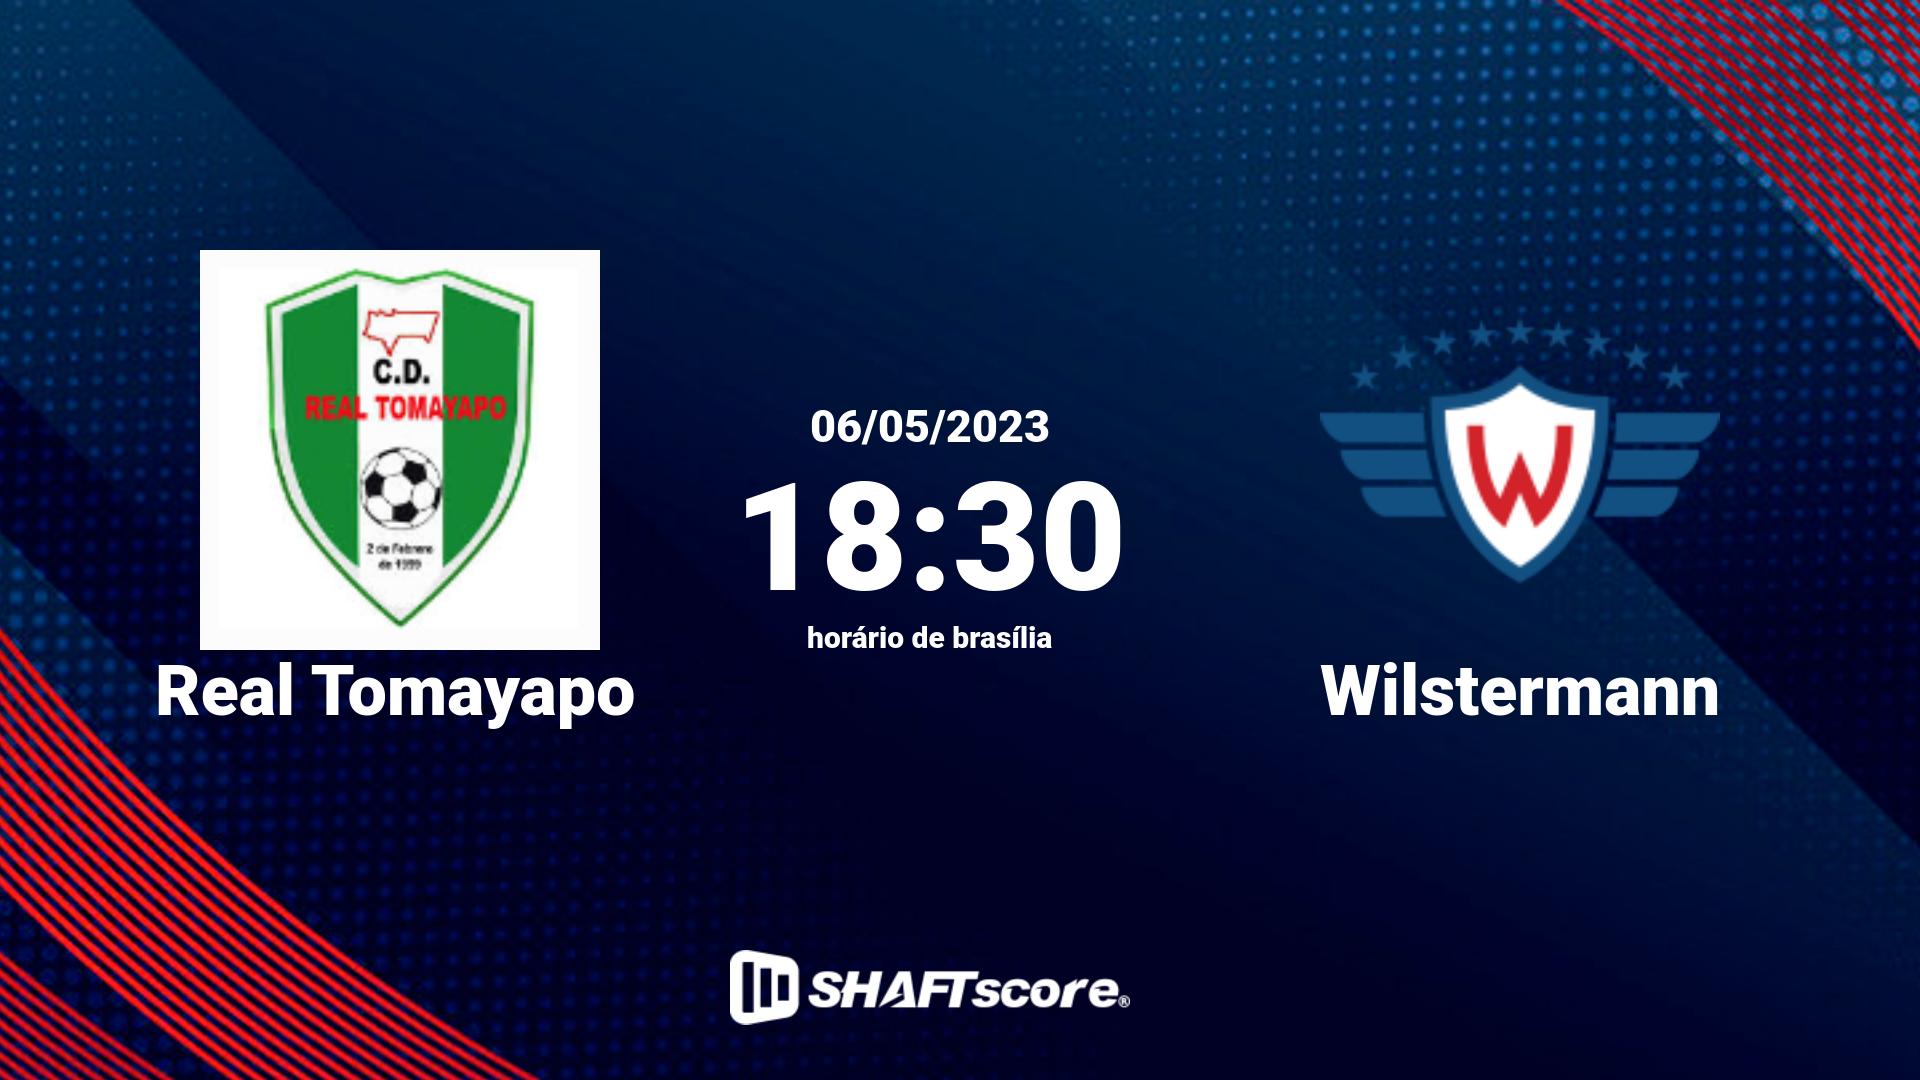 Estatísticas do jogo Real Tomayapo vs Wilstermann 06.05 18:30